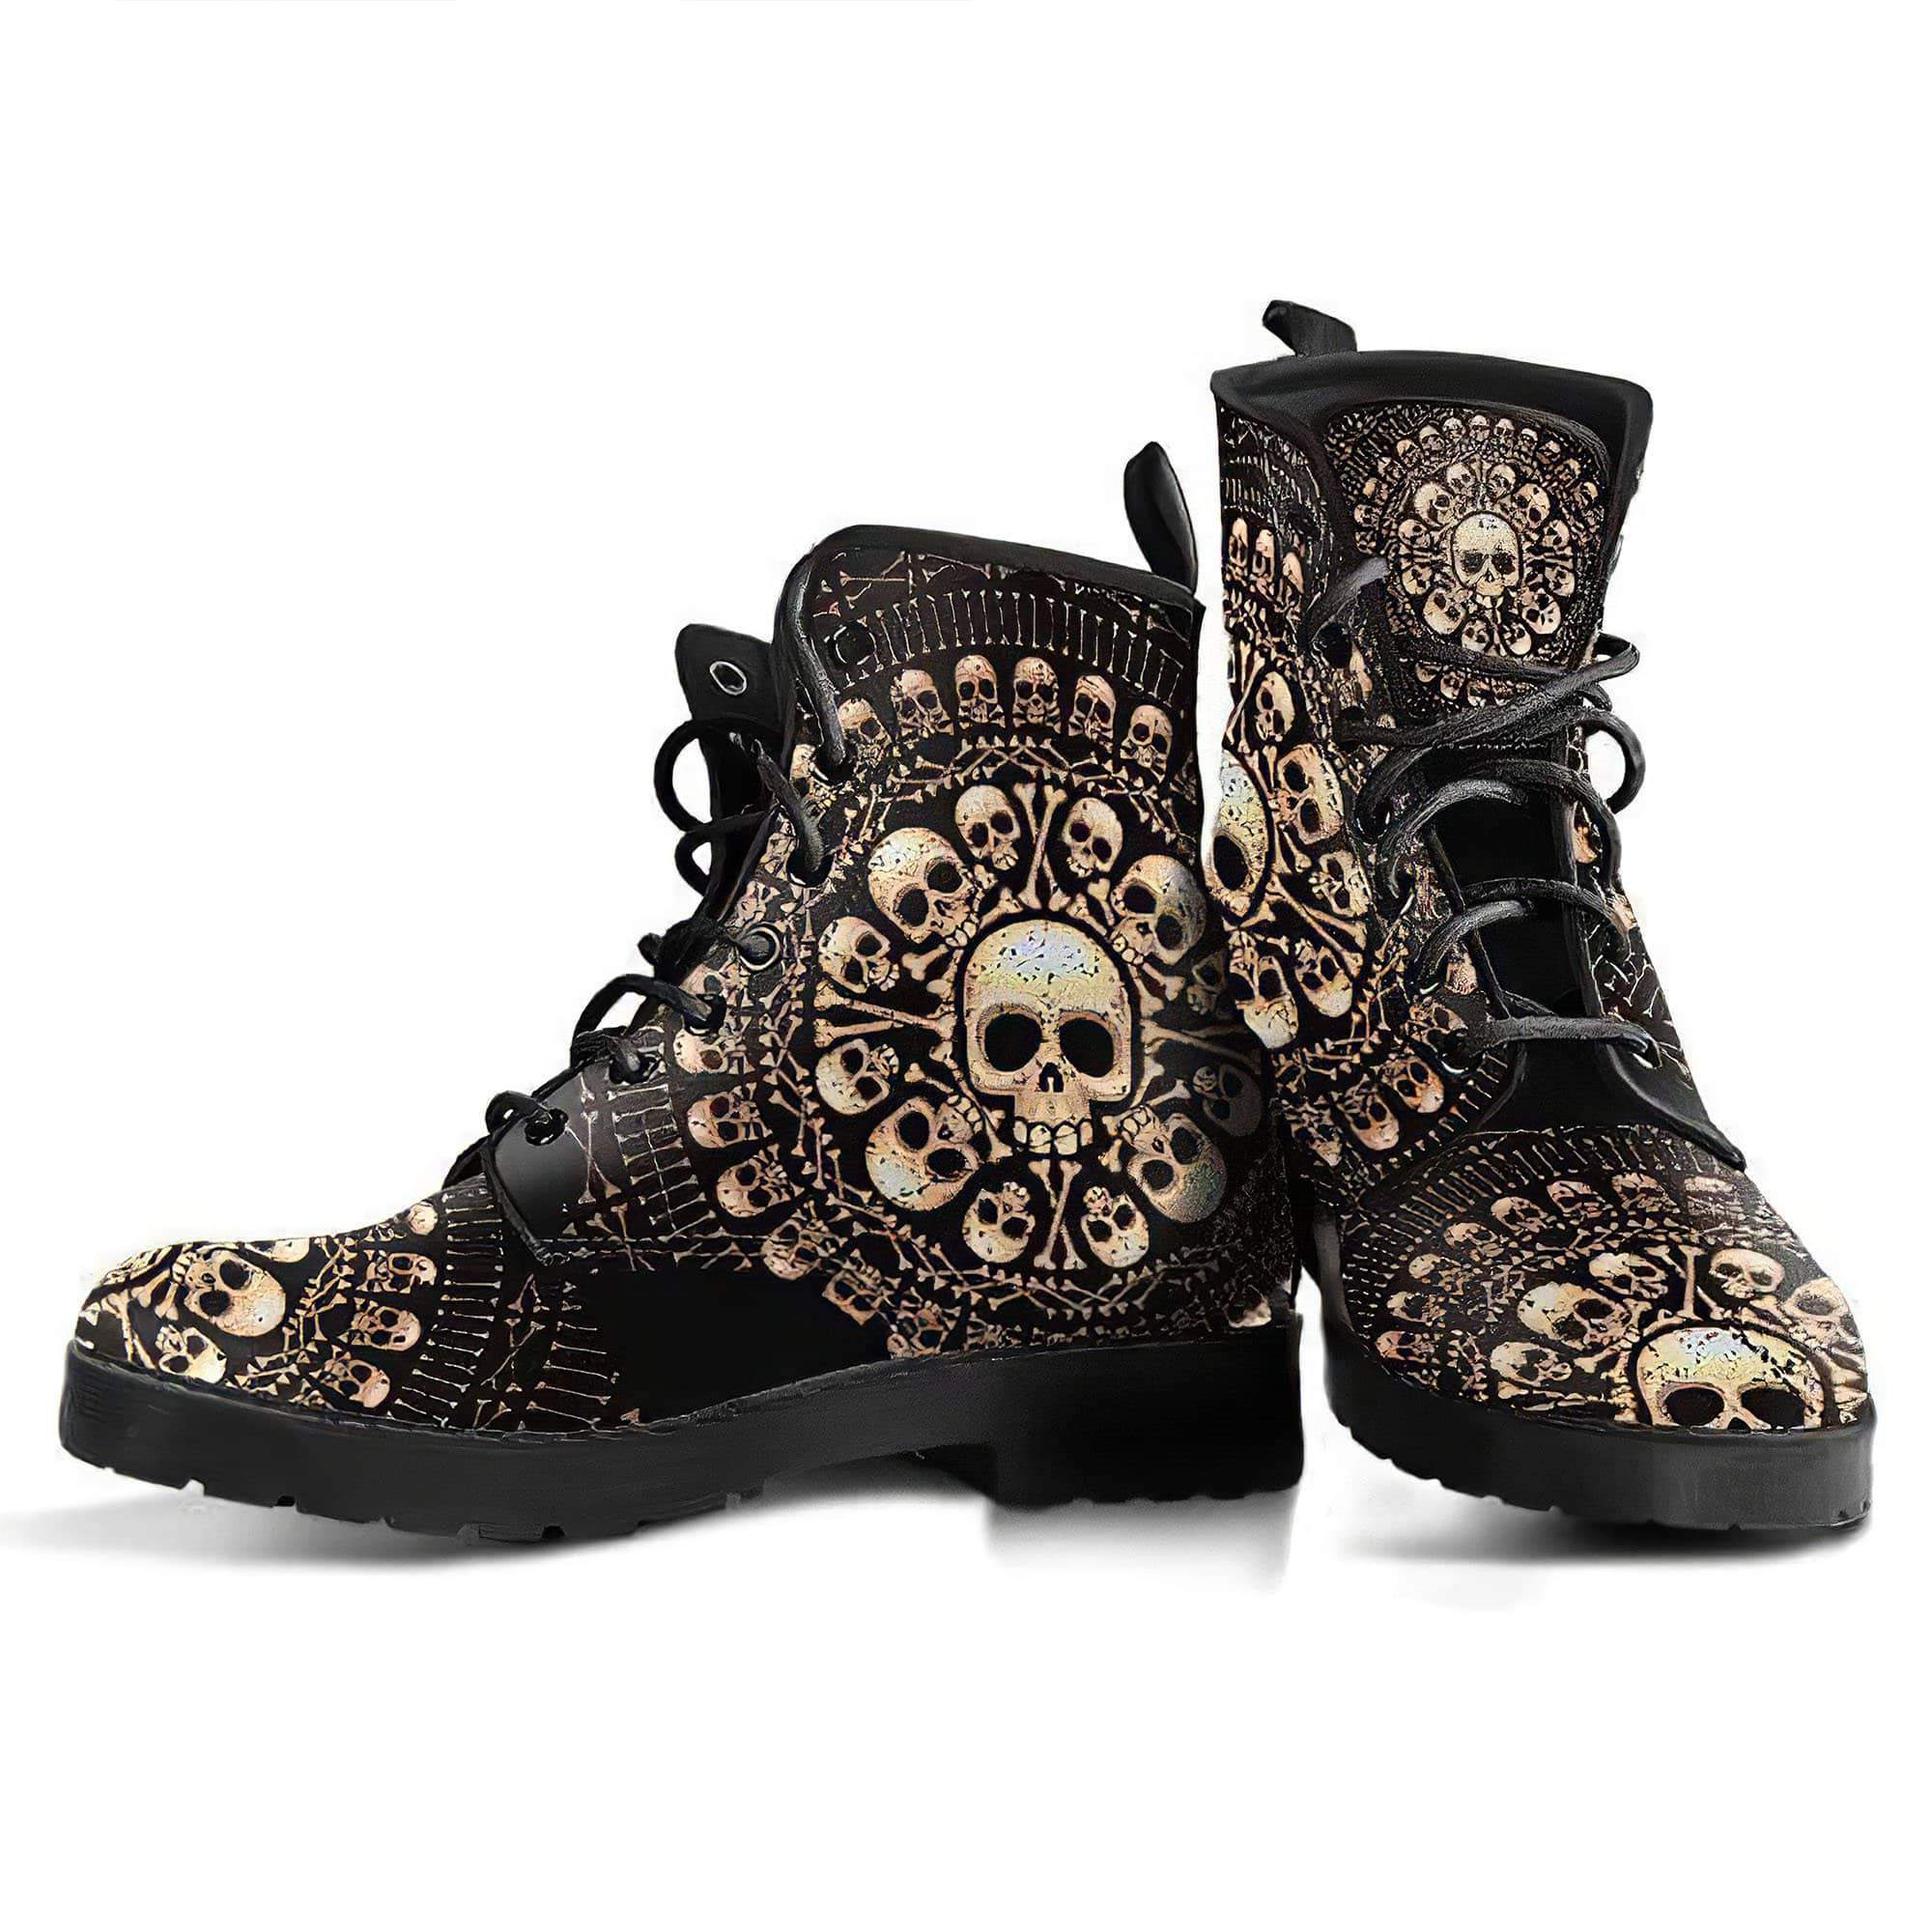 skulls-bones-women-s-leather-boots-black-women-s-leather-boots-12051950501949.jpg